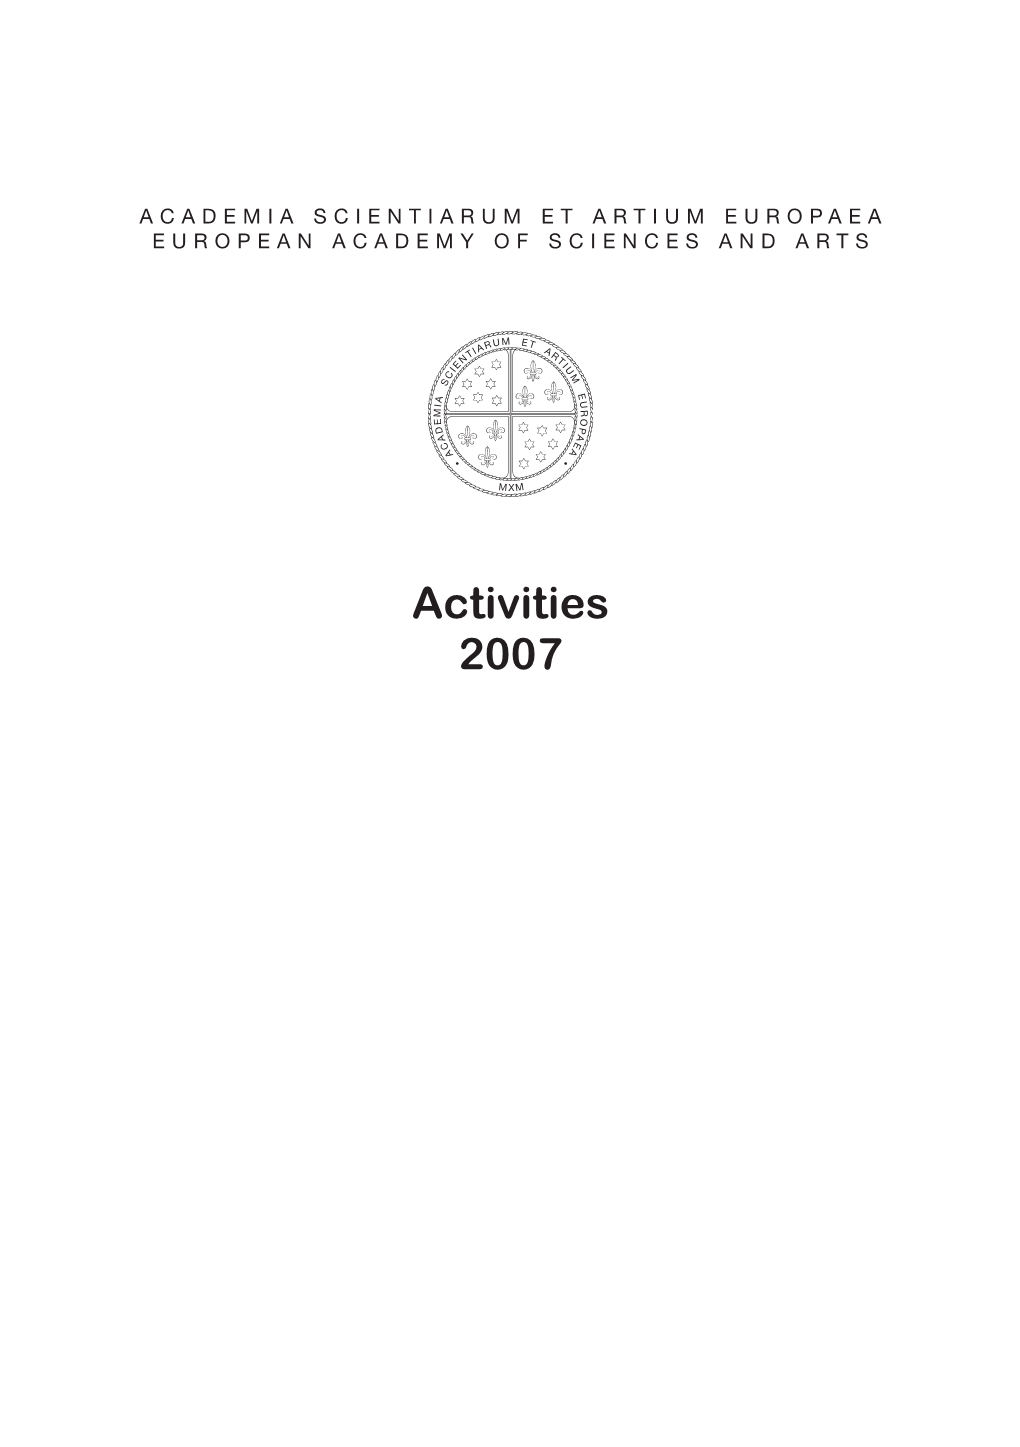 Annual-Report-2007